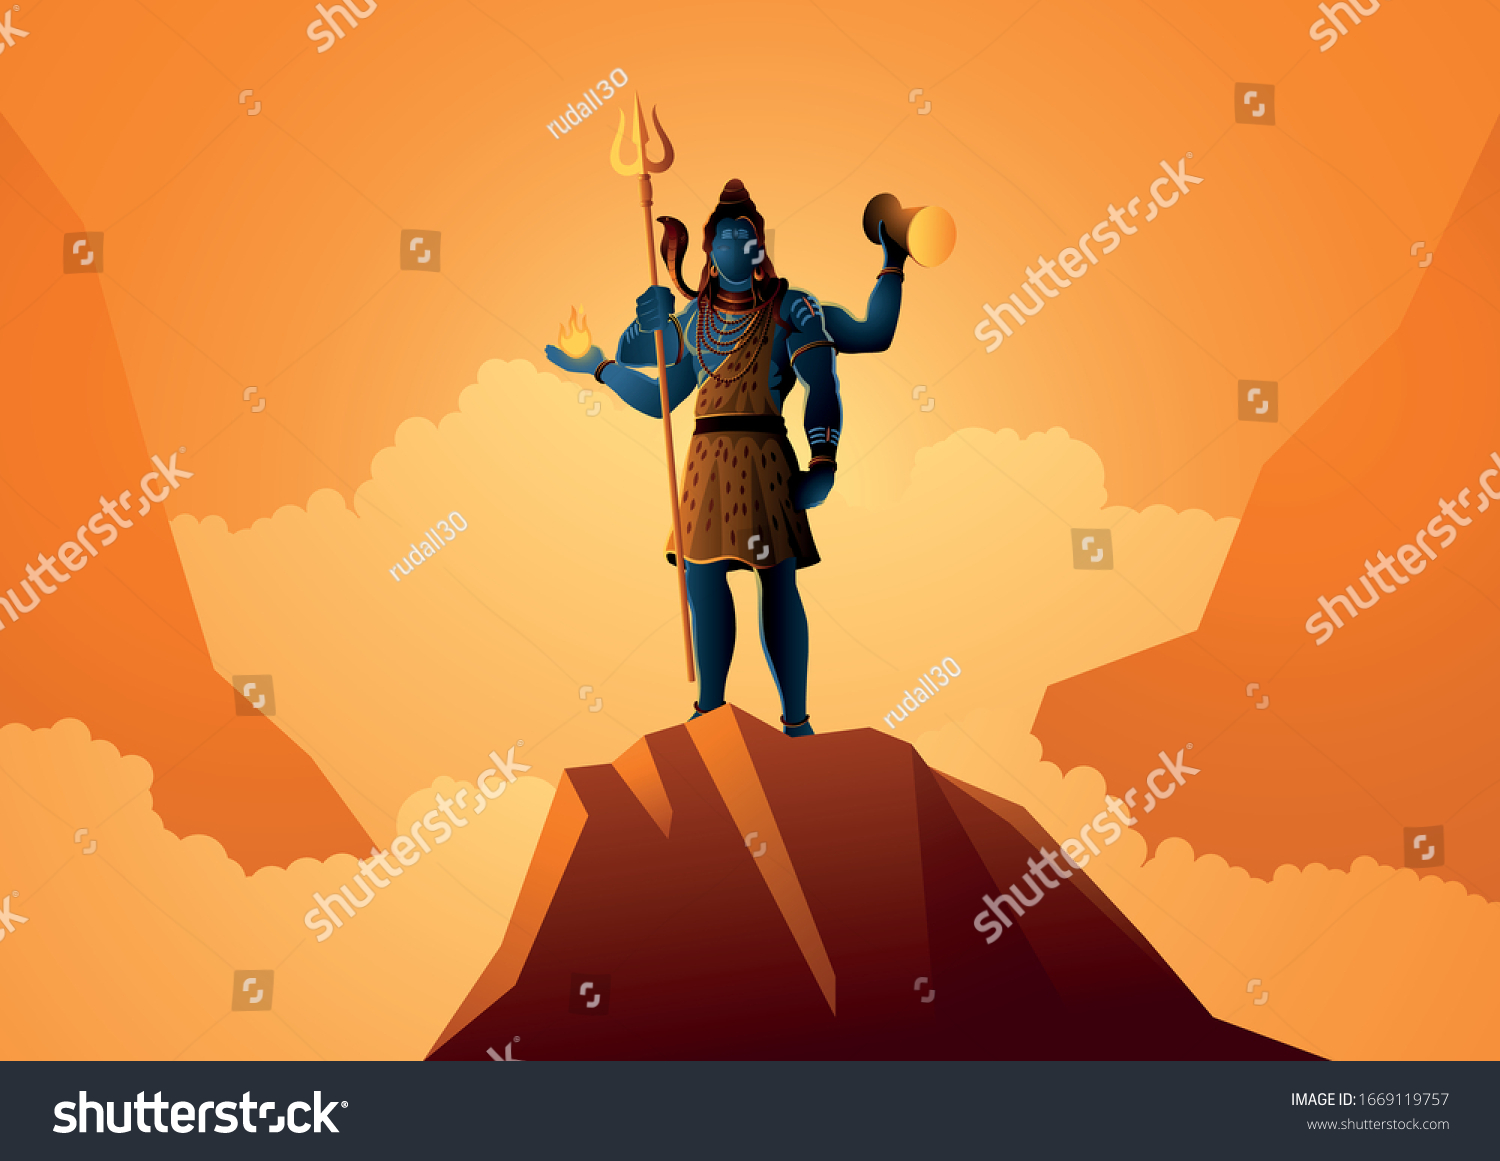 Vector Illustration Lord Shiva Standing On Vector Có Sẵn Miễn Phí Bản Quyền 1669119757